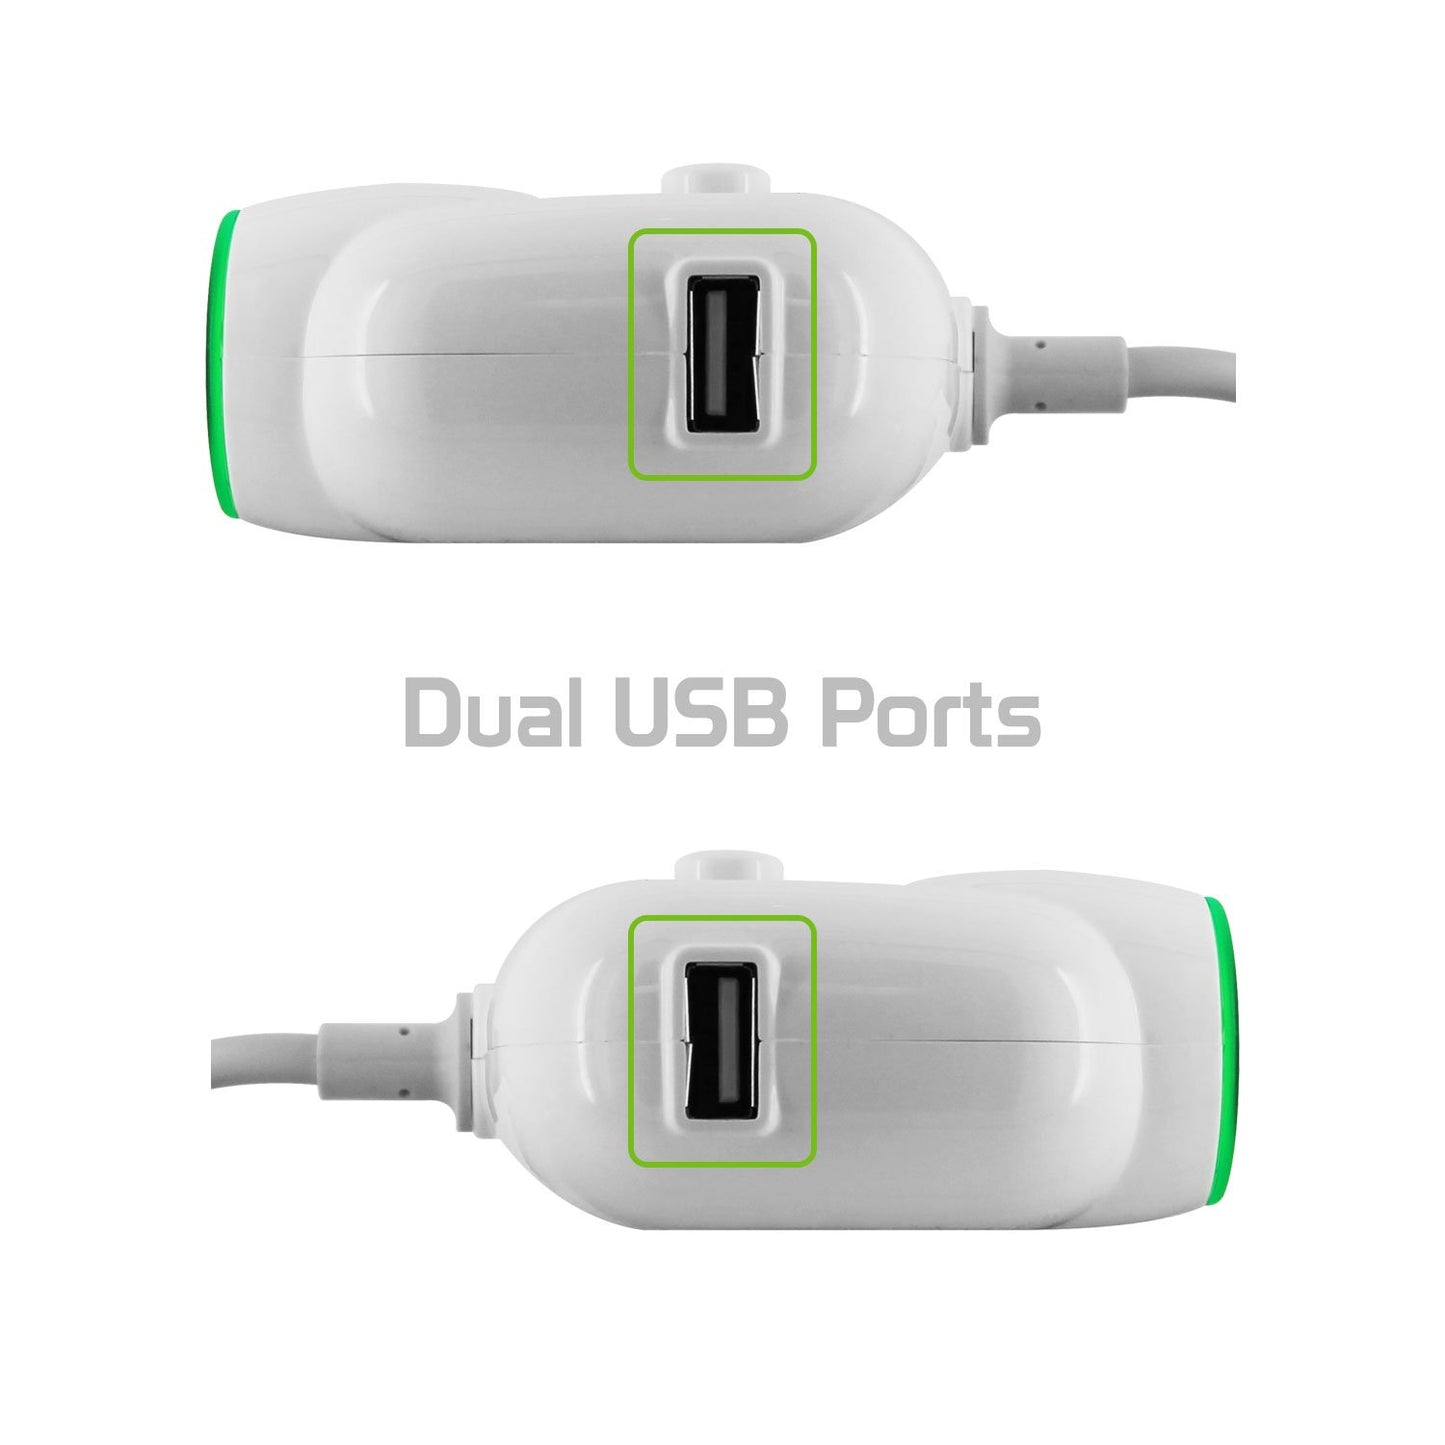 PBACK3WT - Cellet Dual USB Port & 3 Cigarette Port Car Charger for Android & Apple devices - White